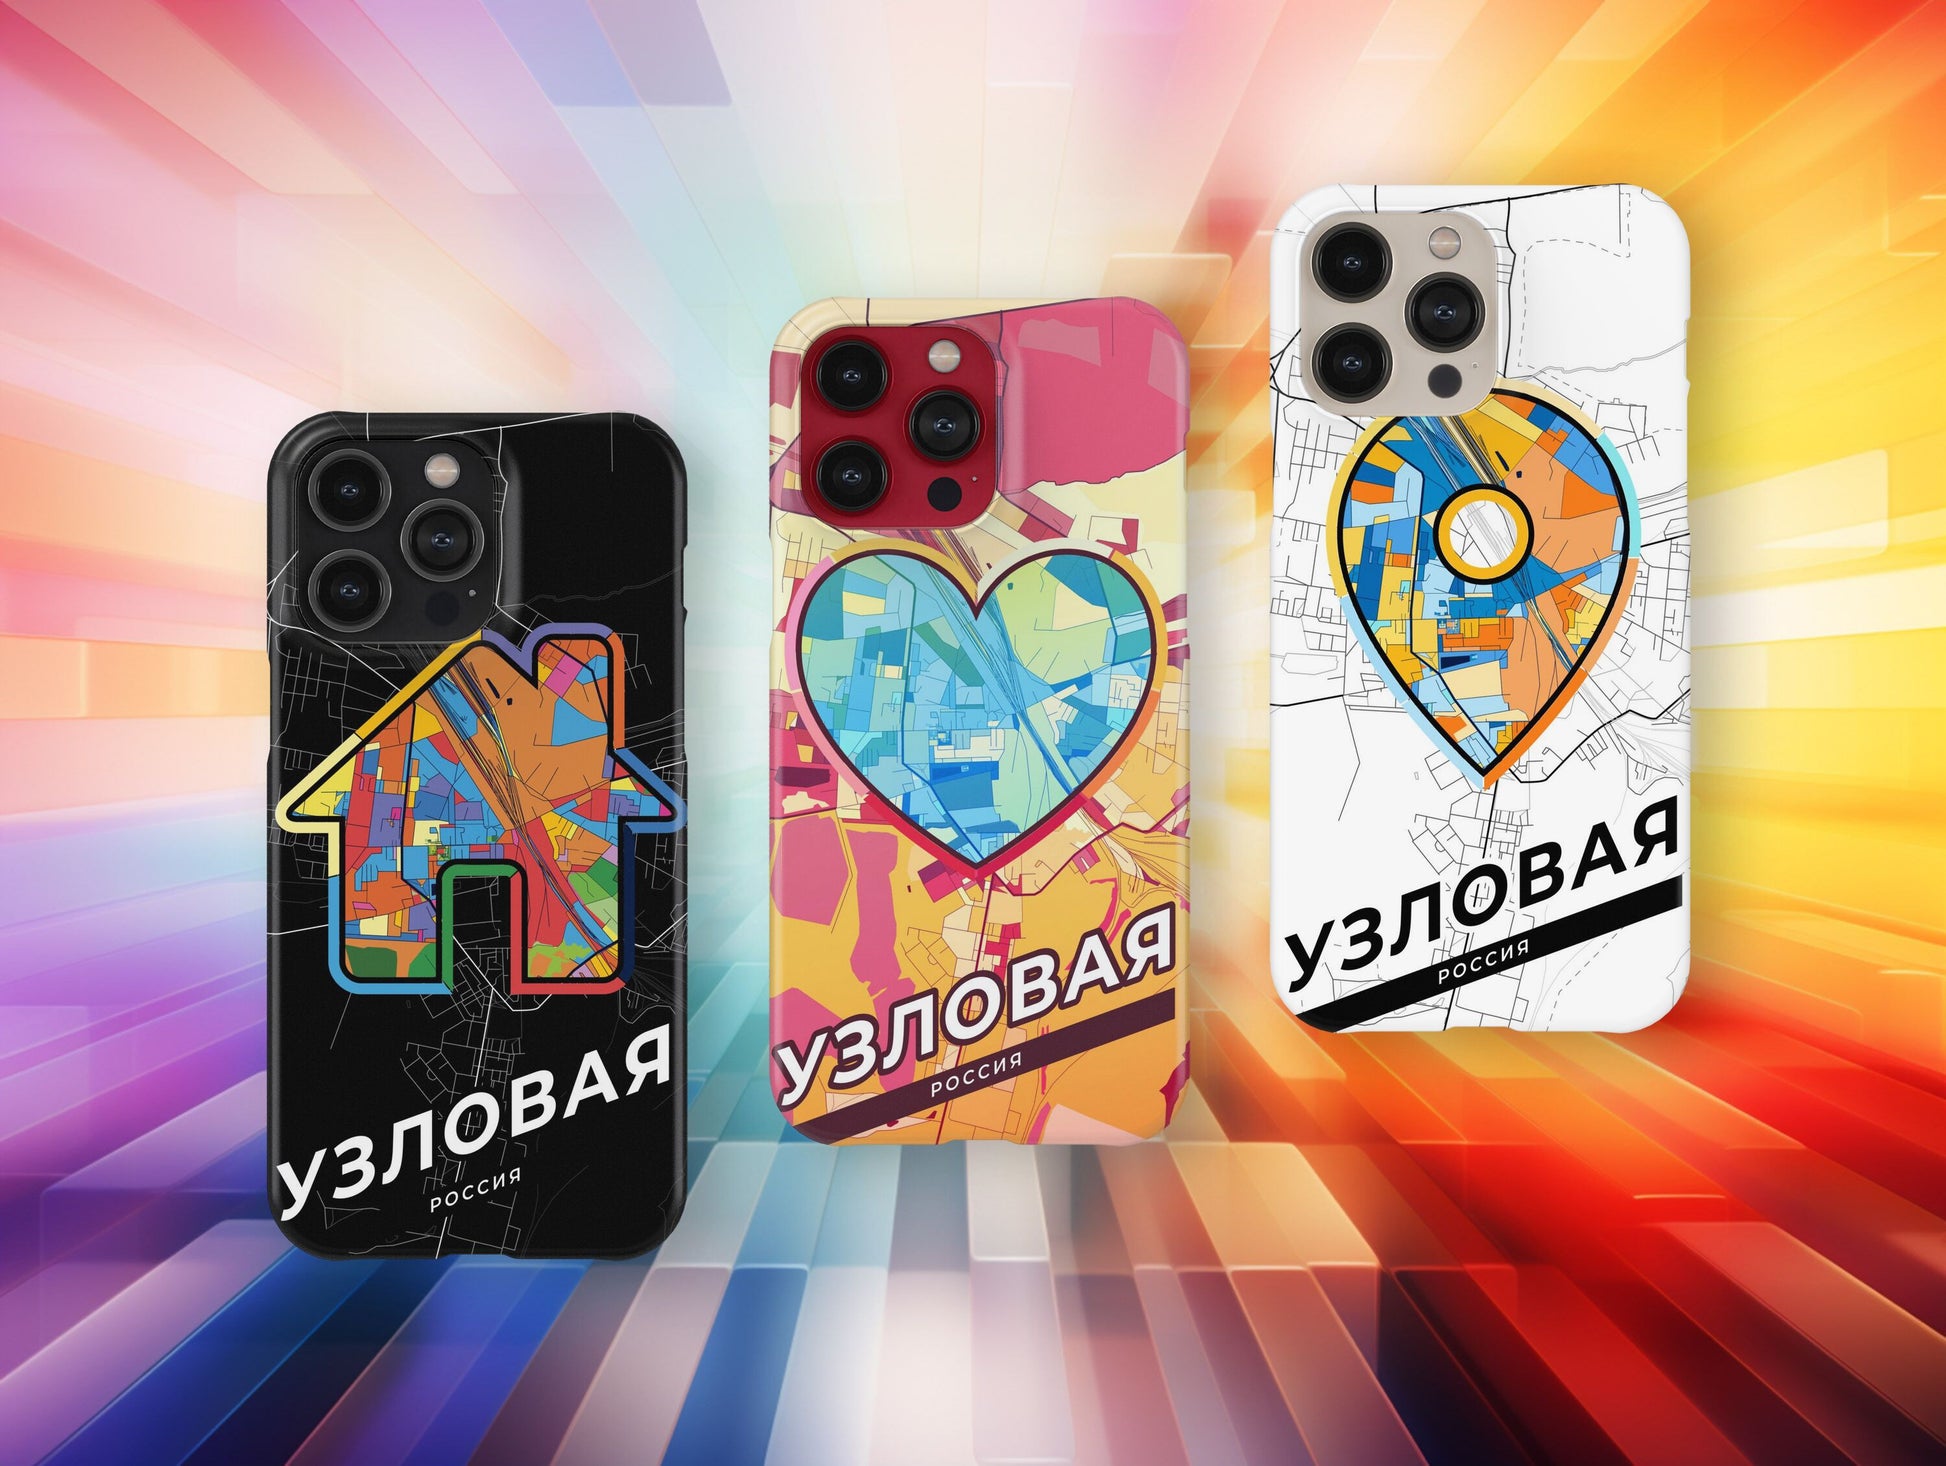 Uzlovaya Russia slim phone case with colorful icon